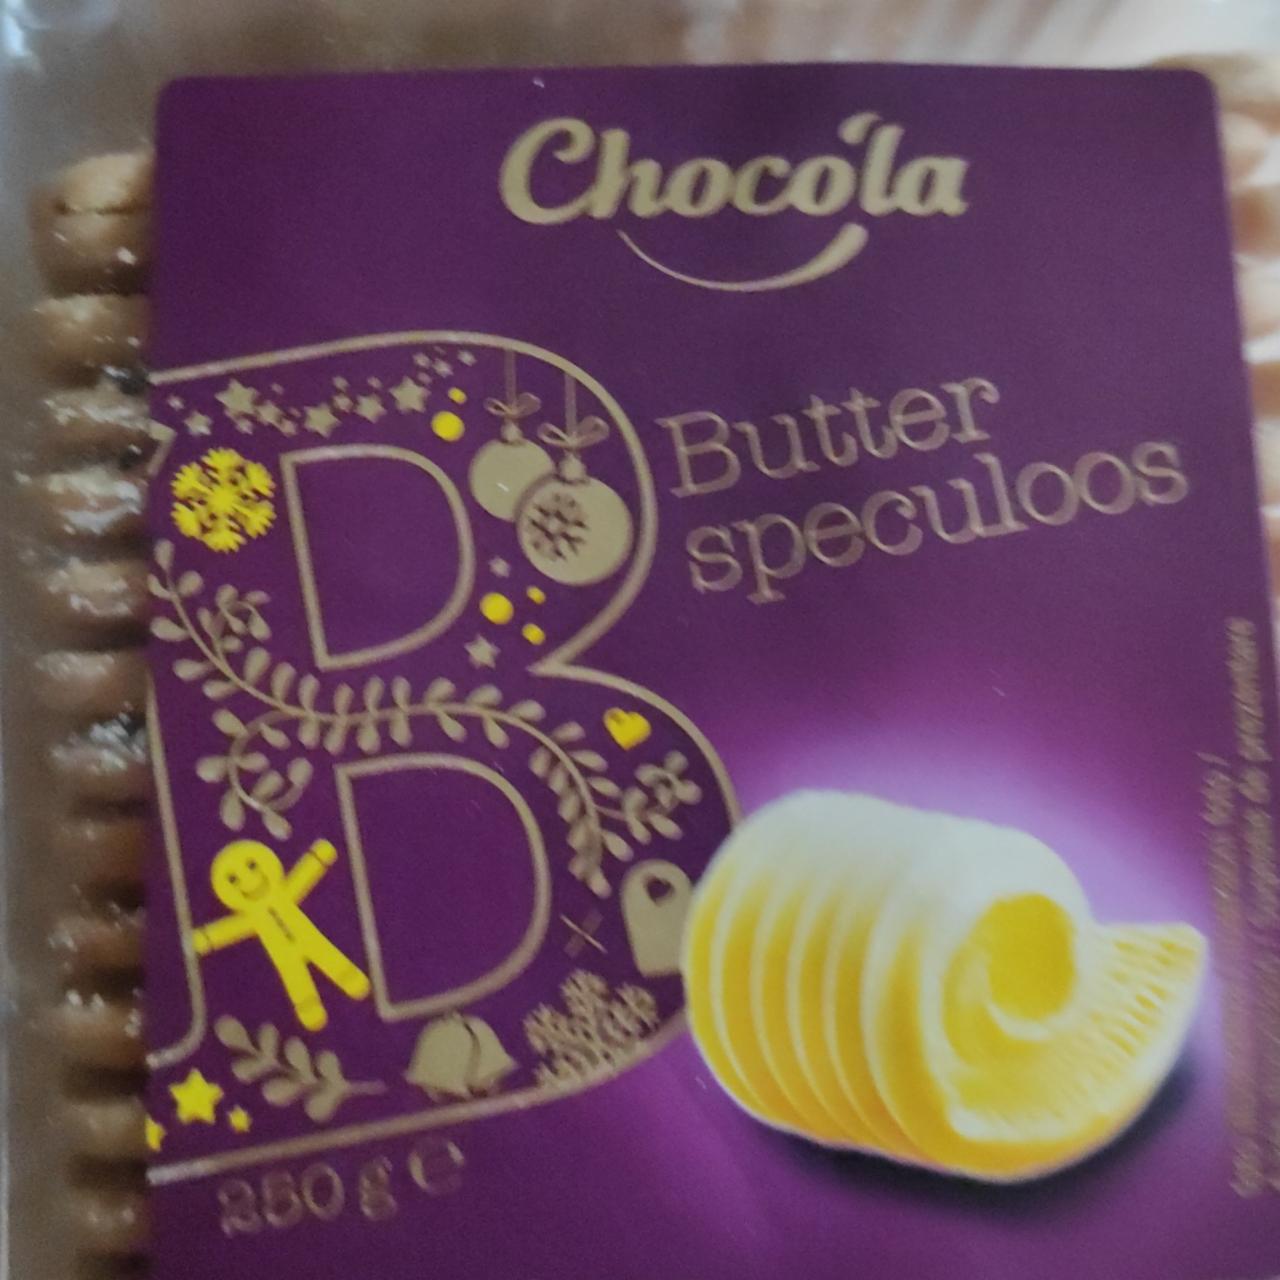 Fotografie - Butter speculoos Chocola